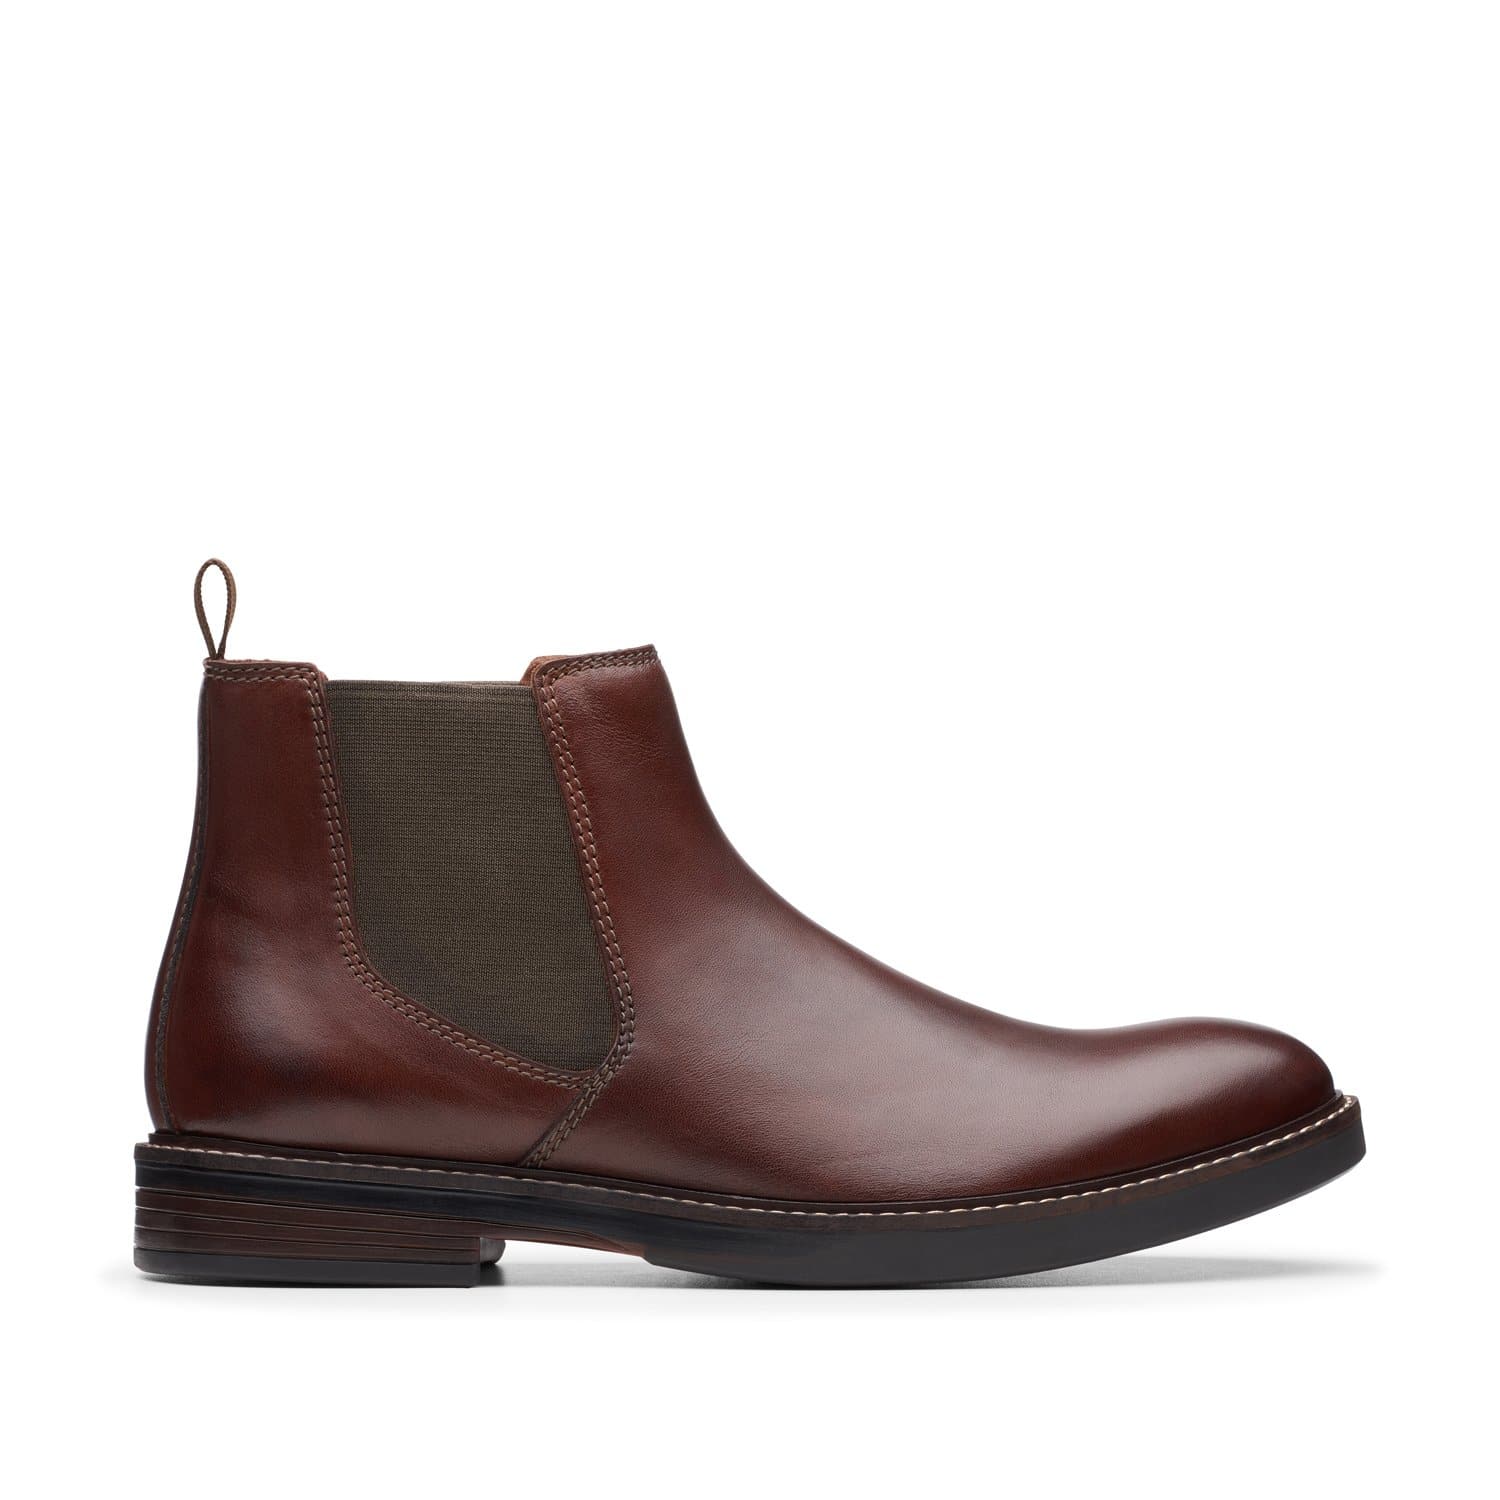 Clarks-Paulson-Up-Men's-Boots-Mahogany-Leather-26144810